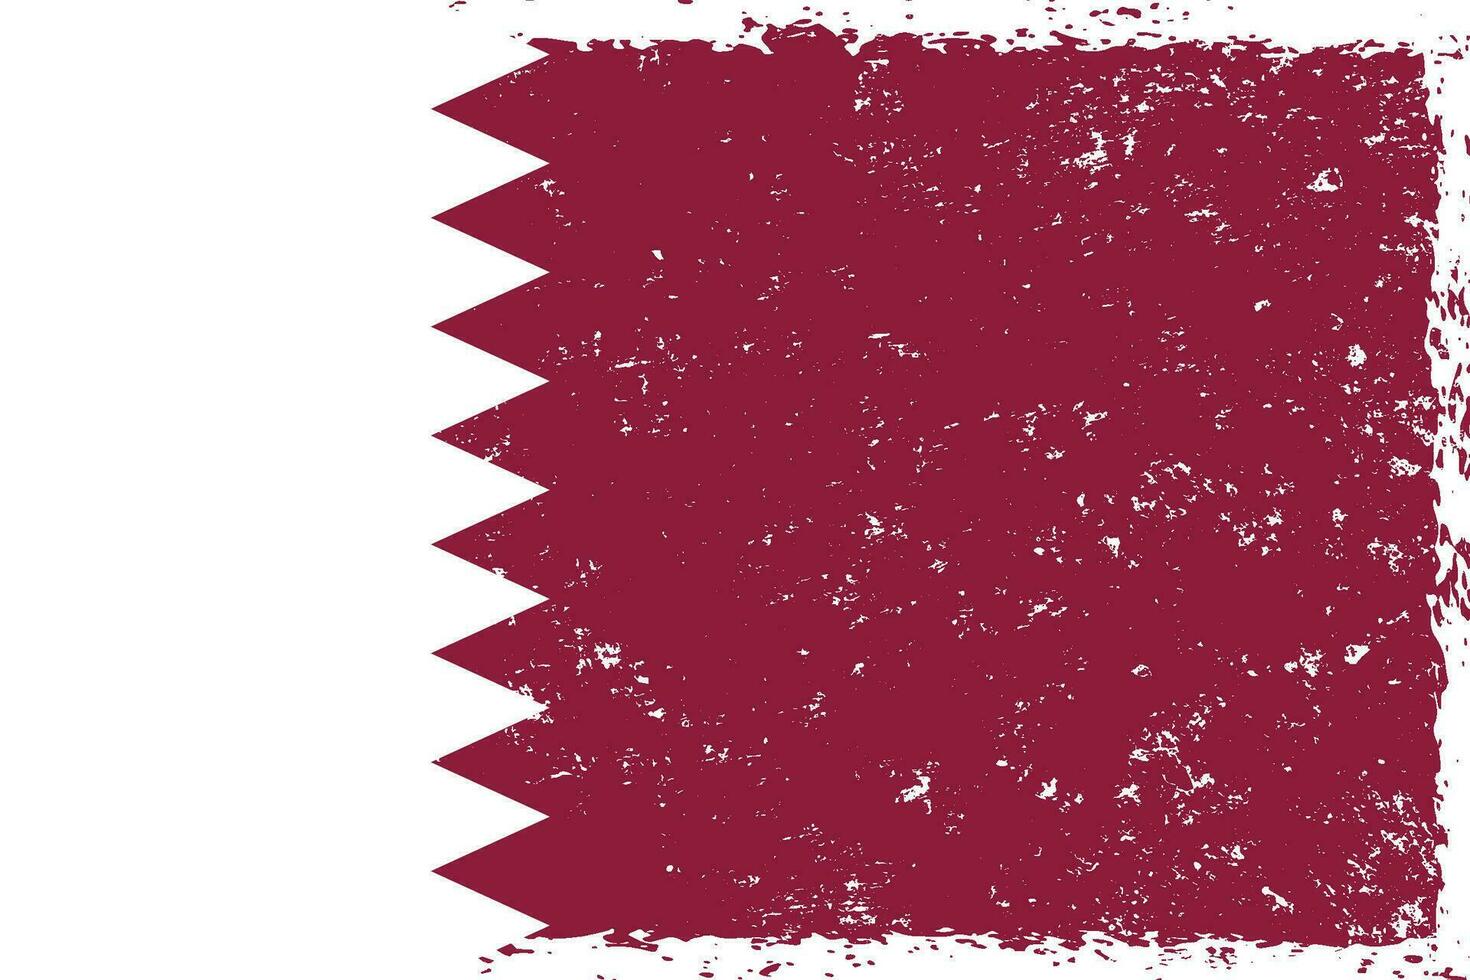 qatar vlag grunge verontrust stijl vector